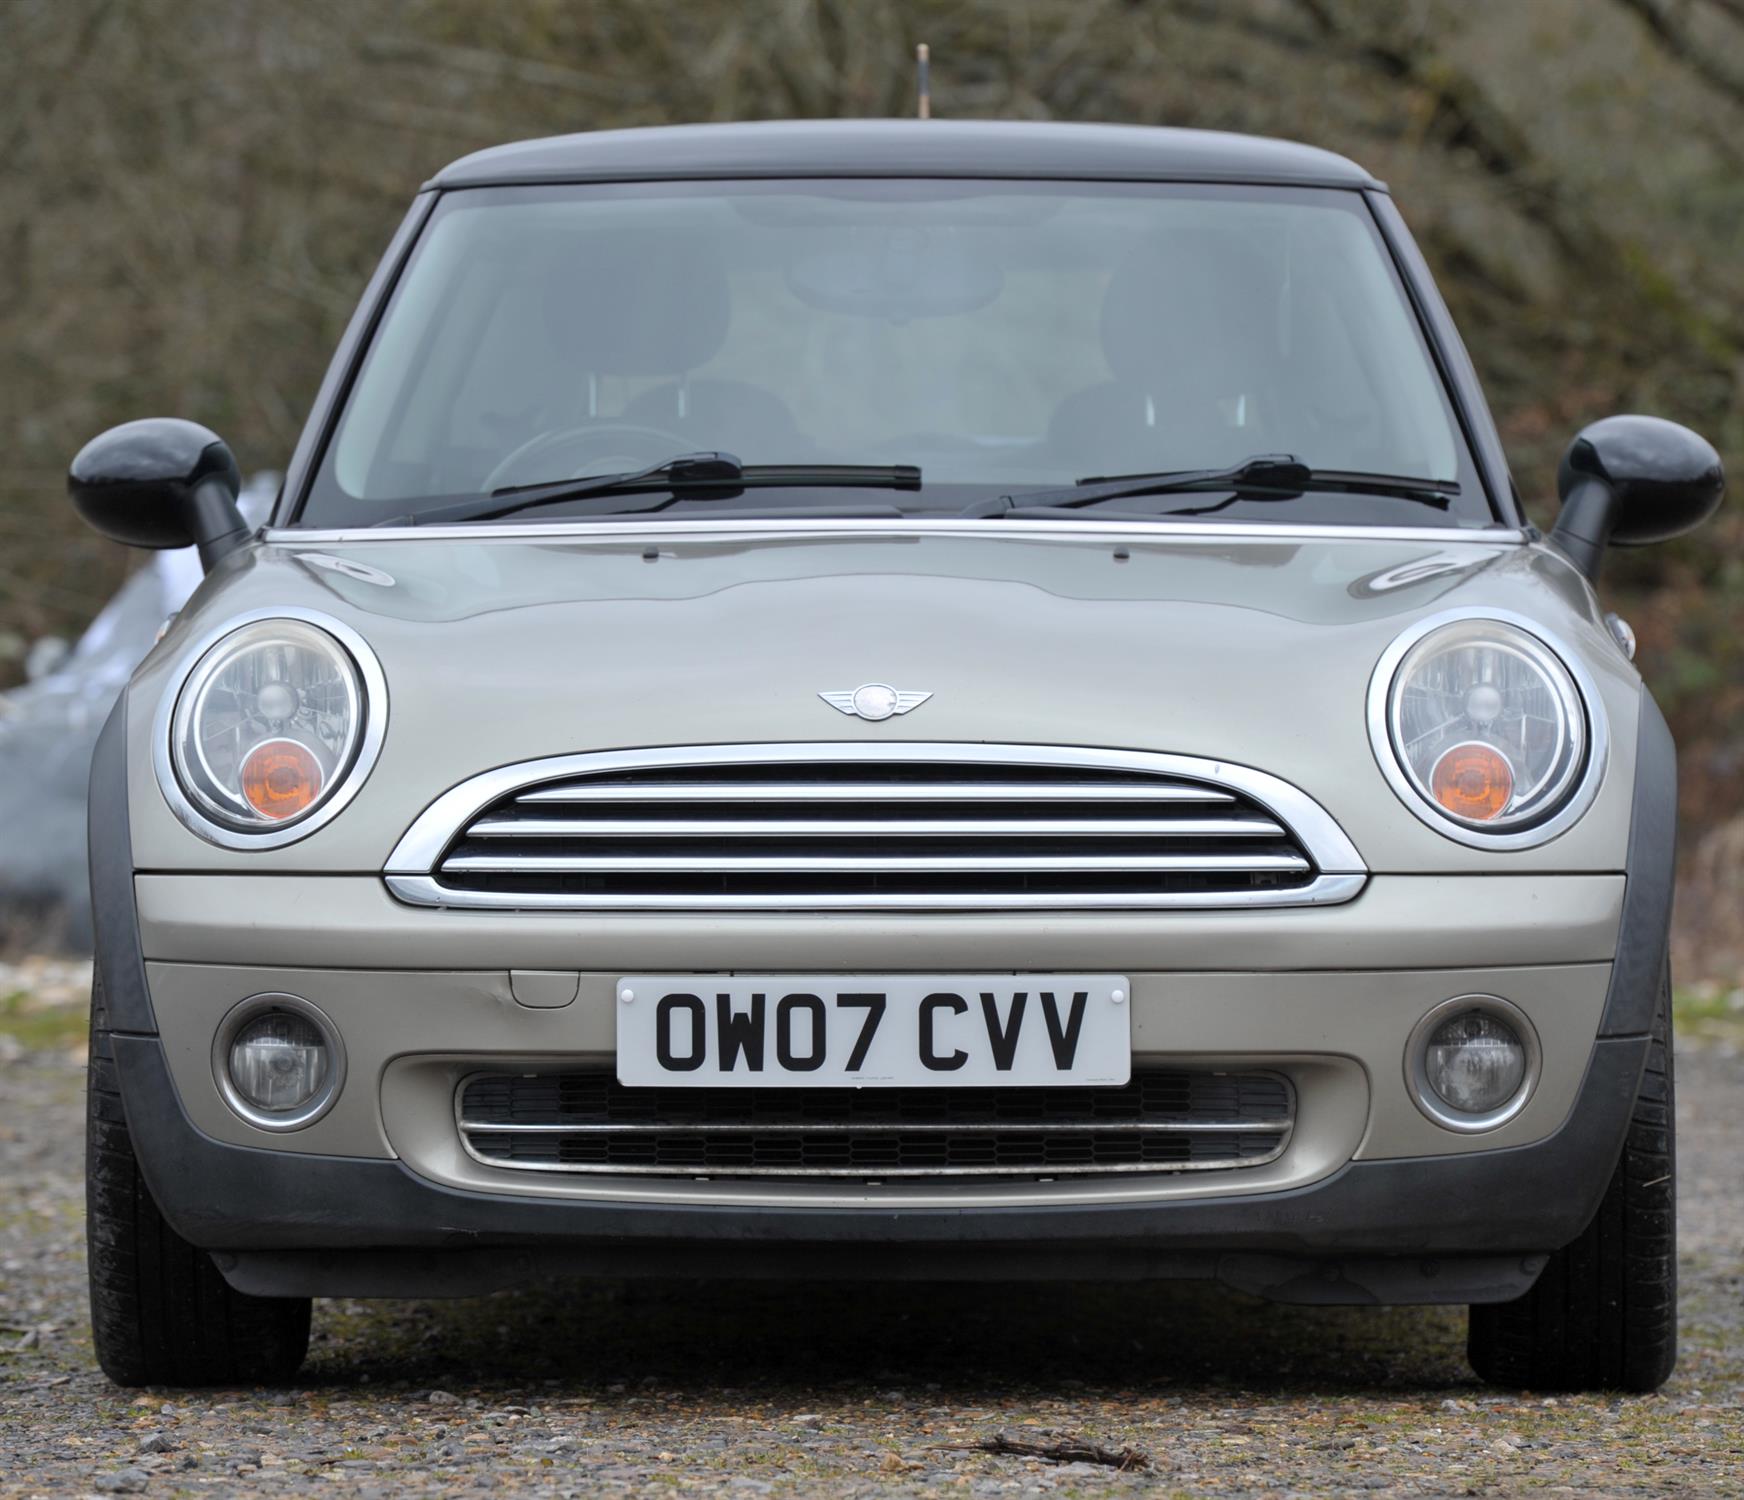 2007 Mini Cooper 1.6 petrol 6 speed manual. Registration number: OW07 CVV. Mileage: 112,422. - Image 2 of 14